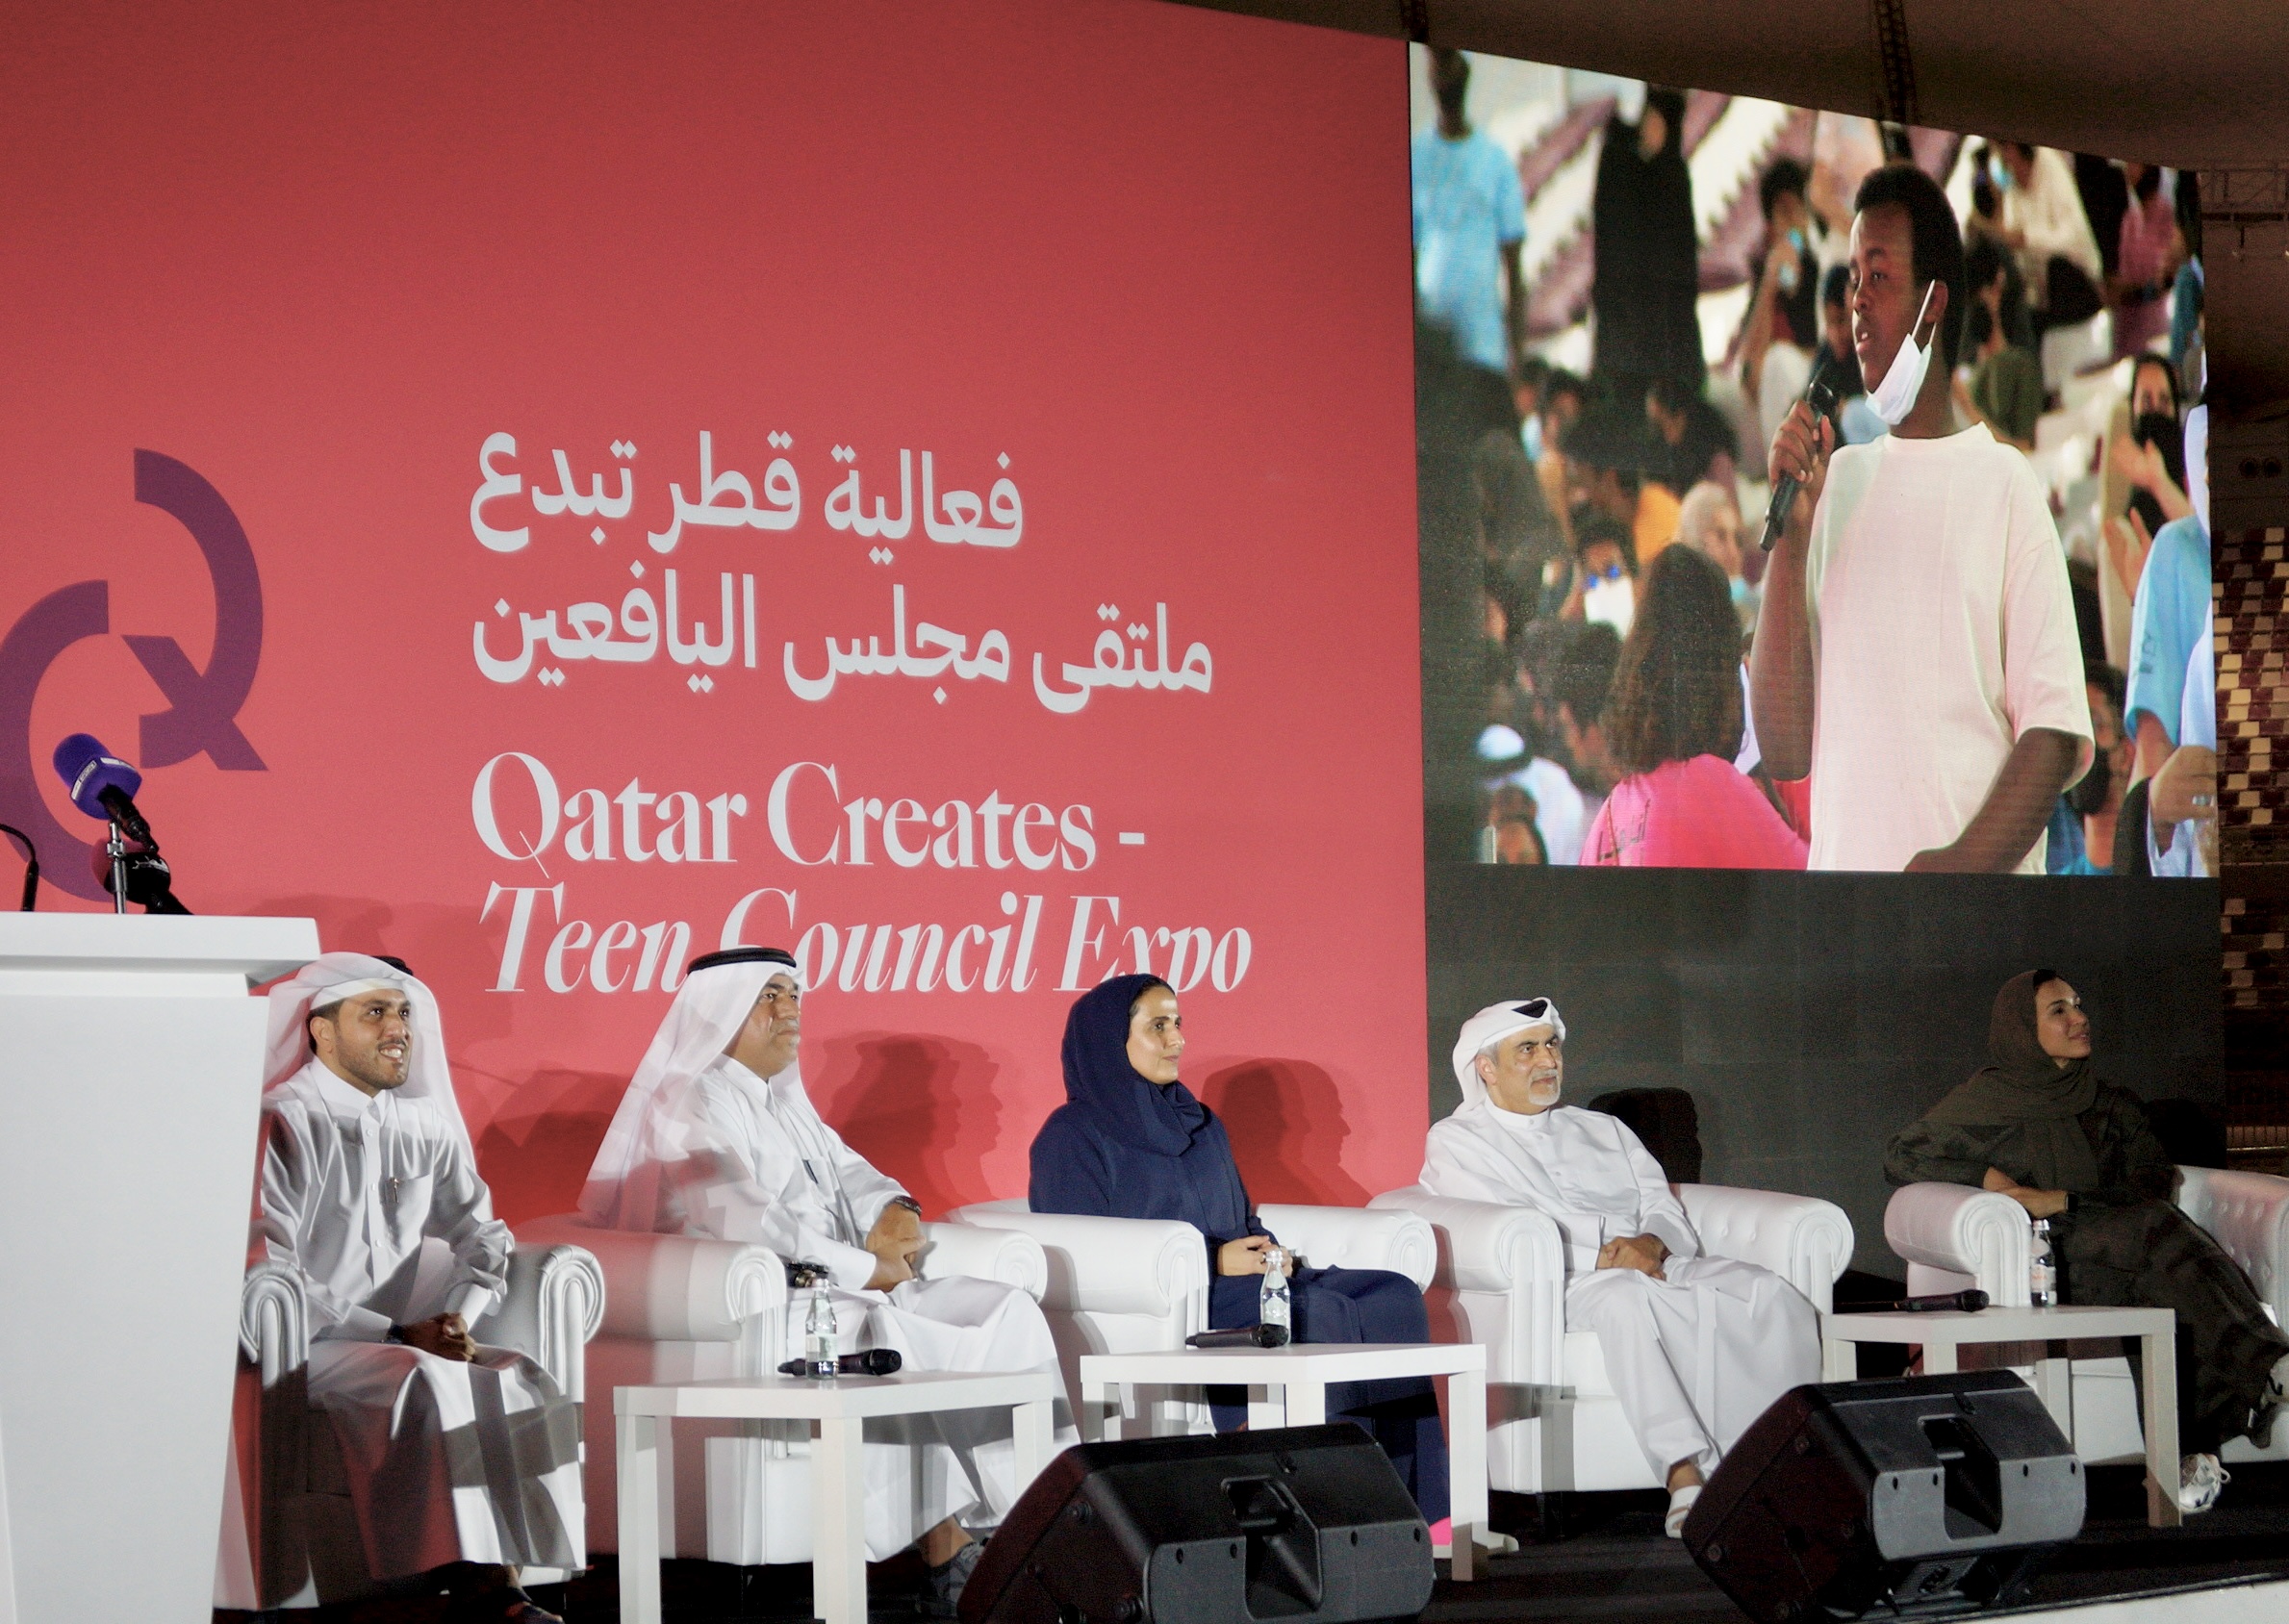 Qatar Museums Organizes 'Qatar Creates - Teen Council Expo'